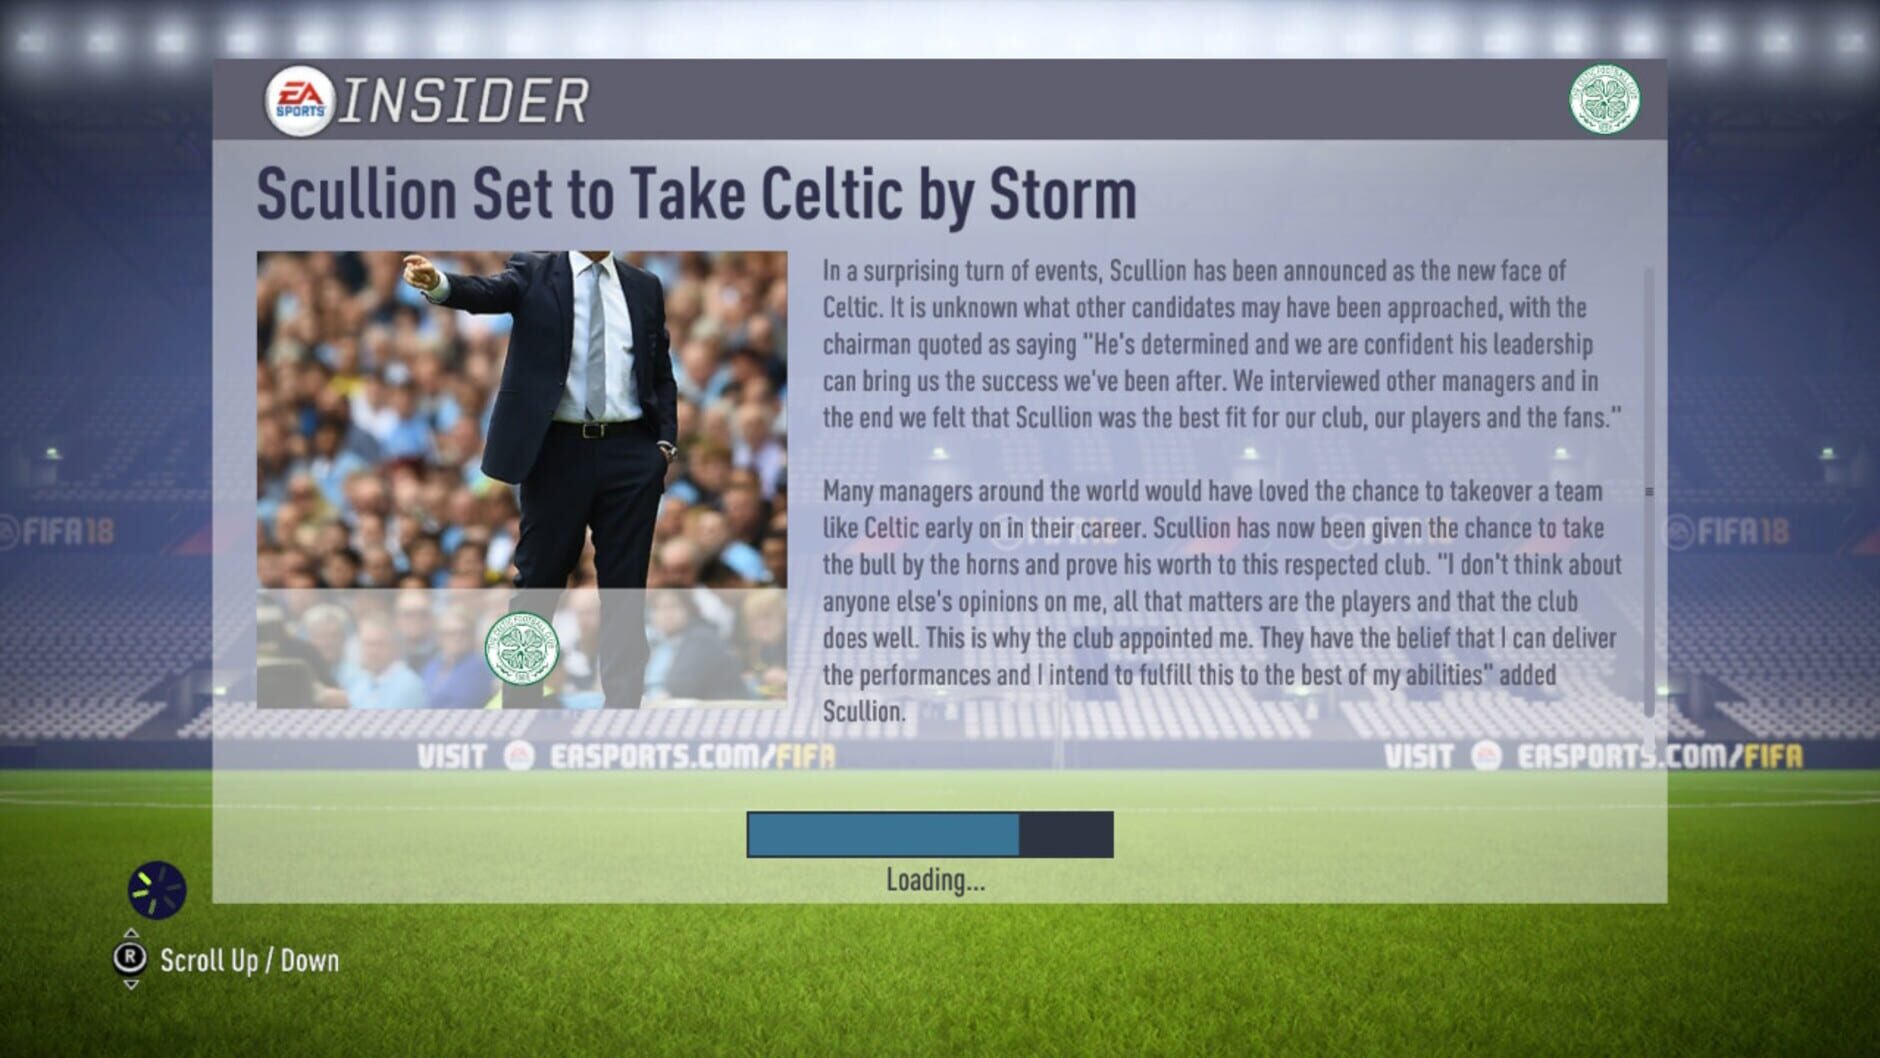 Screenshot for FIFA 18